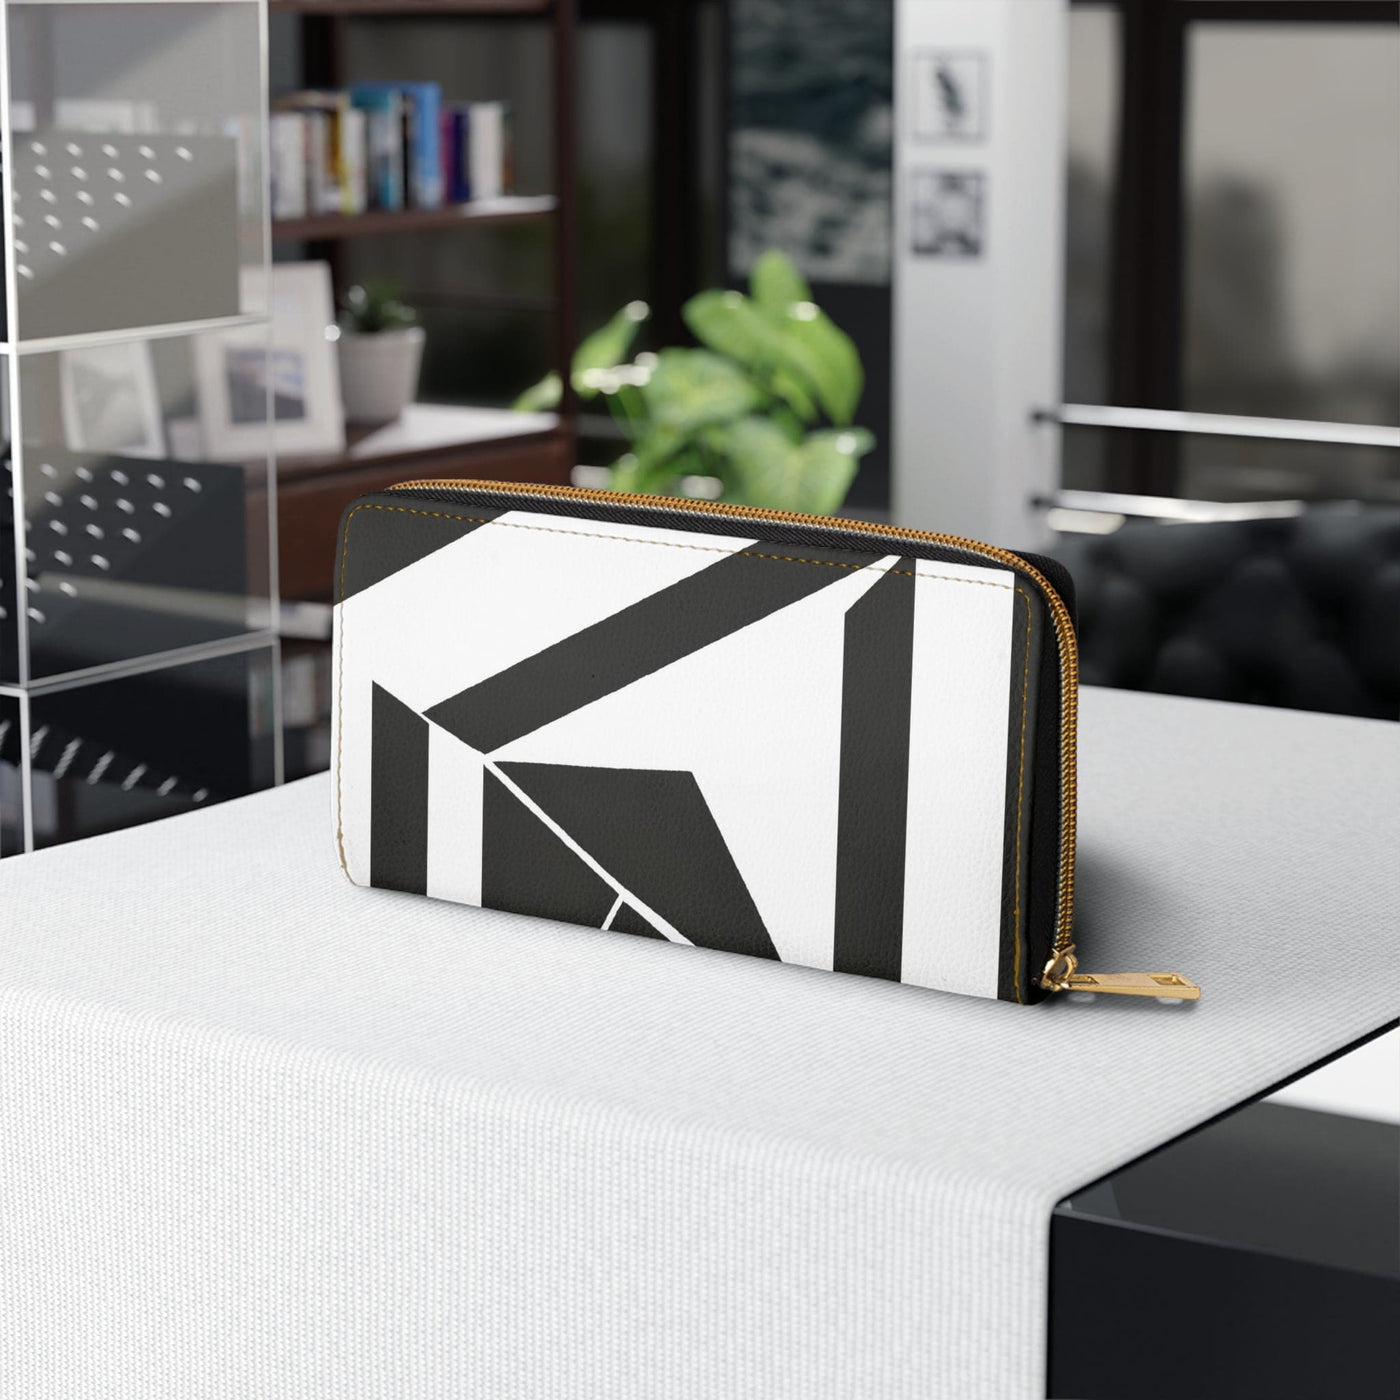 Black And White Geometric Pattern Womens Zipper Wallet Clutch Purse - Bags